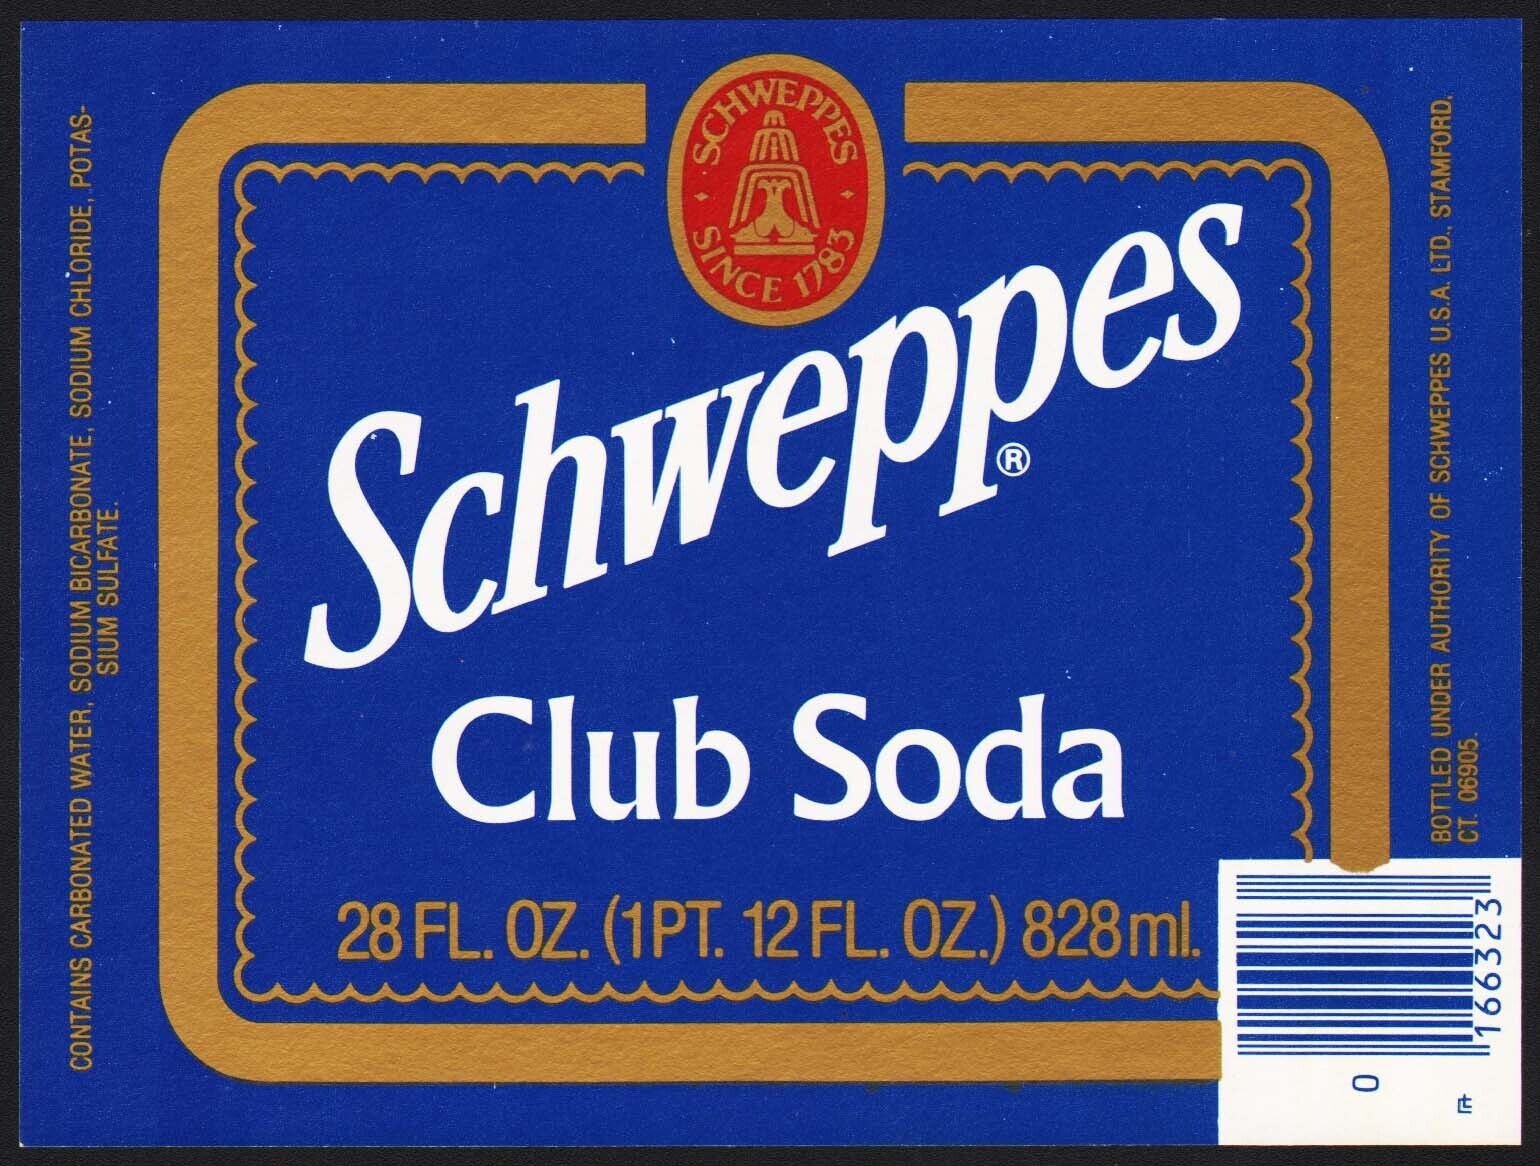 Vintage soda pop bottle label SCHWEPPES CLUB SODA 28oz size Stamford CT nrmt+